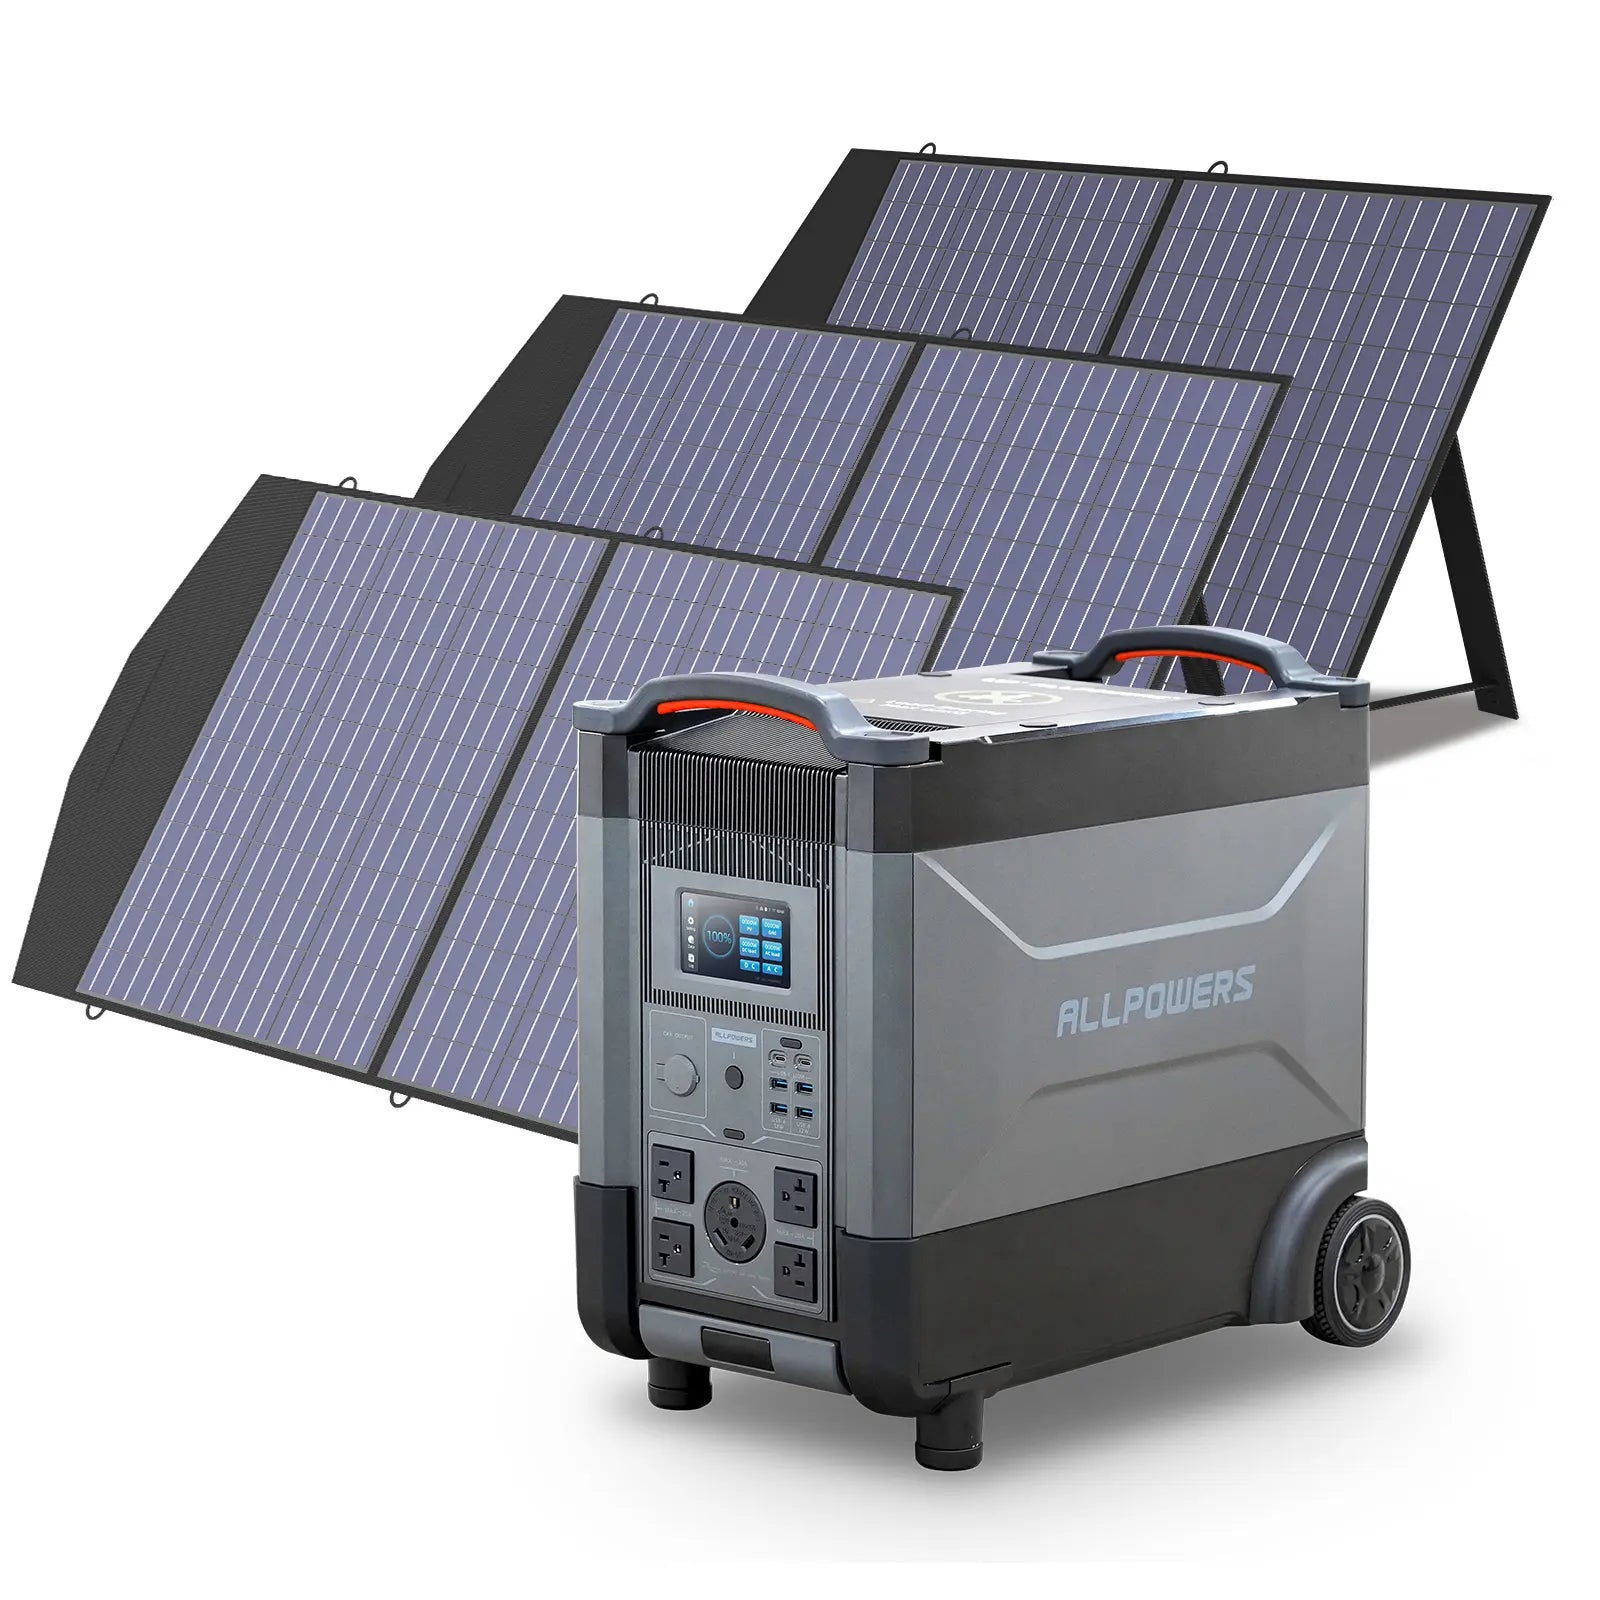 ALLPOWERS Solar Generator Kit 4000W (R4000 + 3 x SP027 100W Solar Panel)